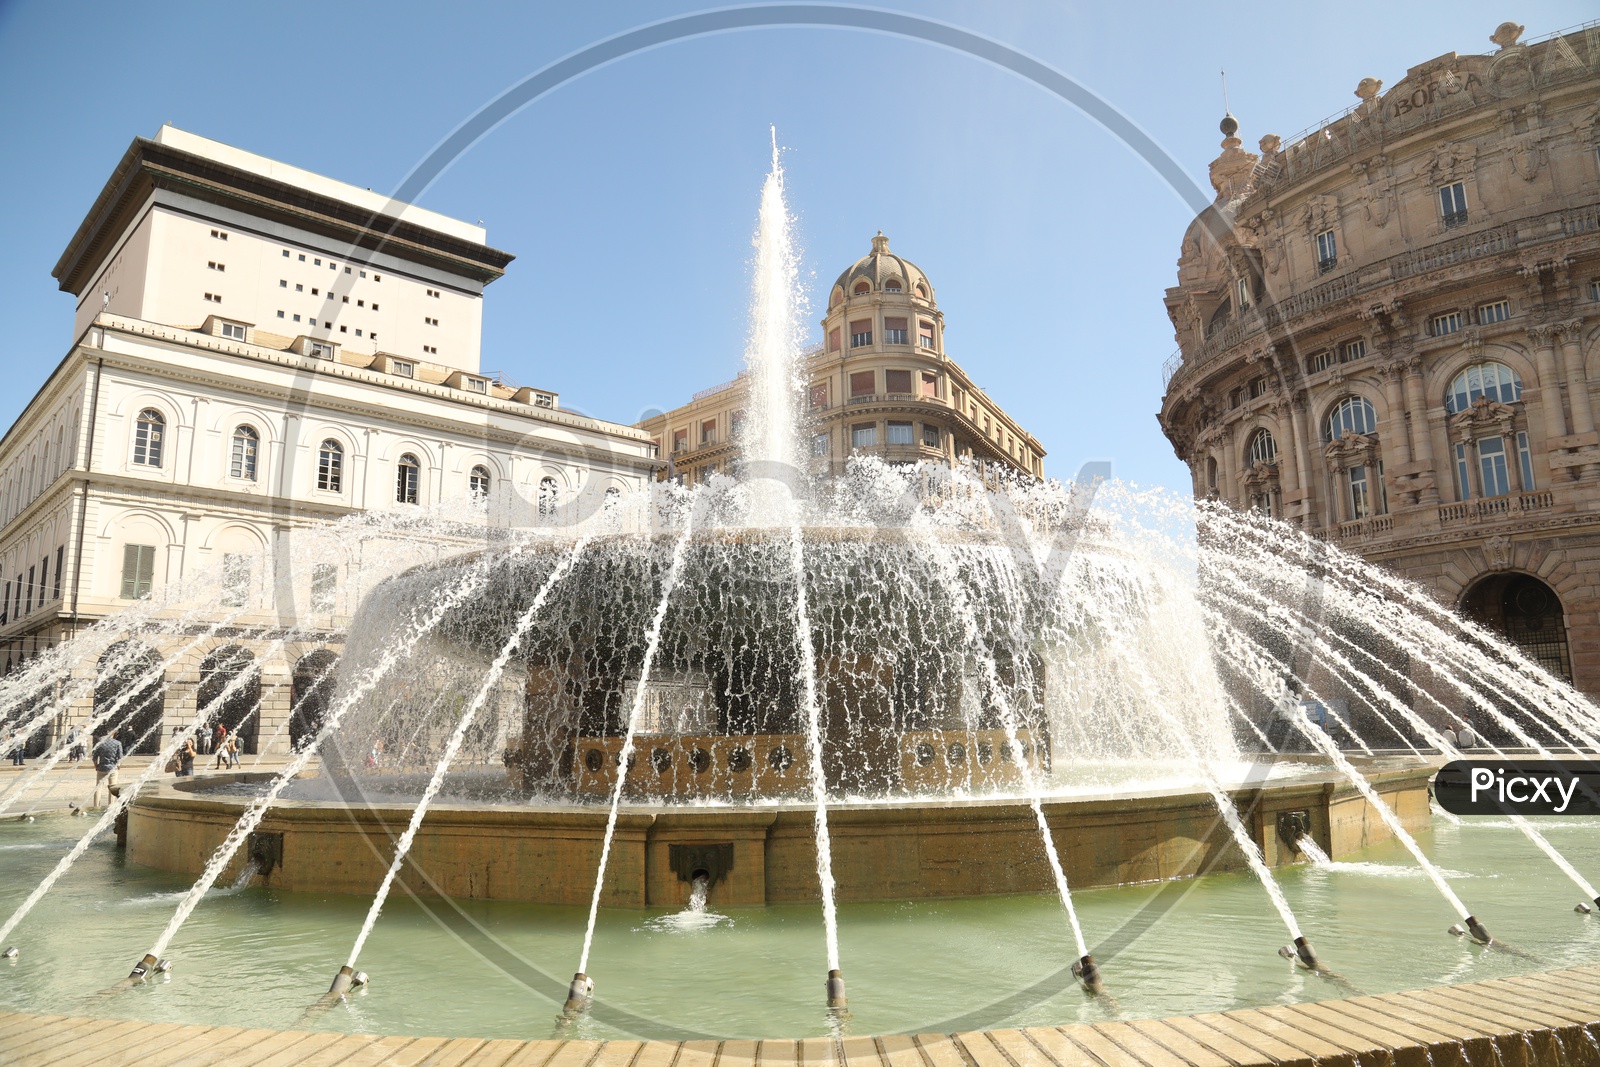 Water fountain alongside a Palace